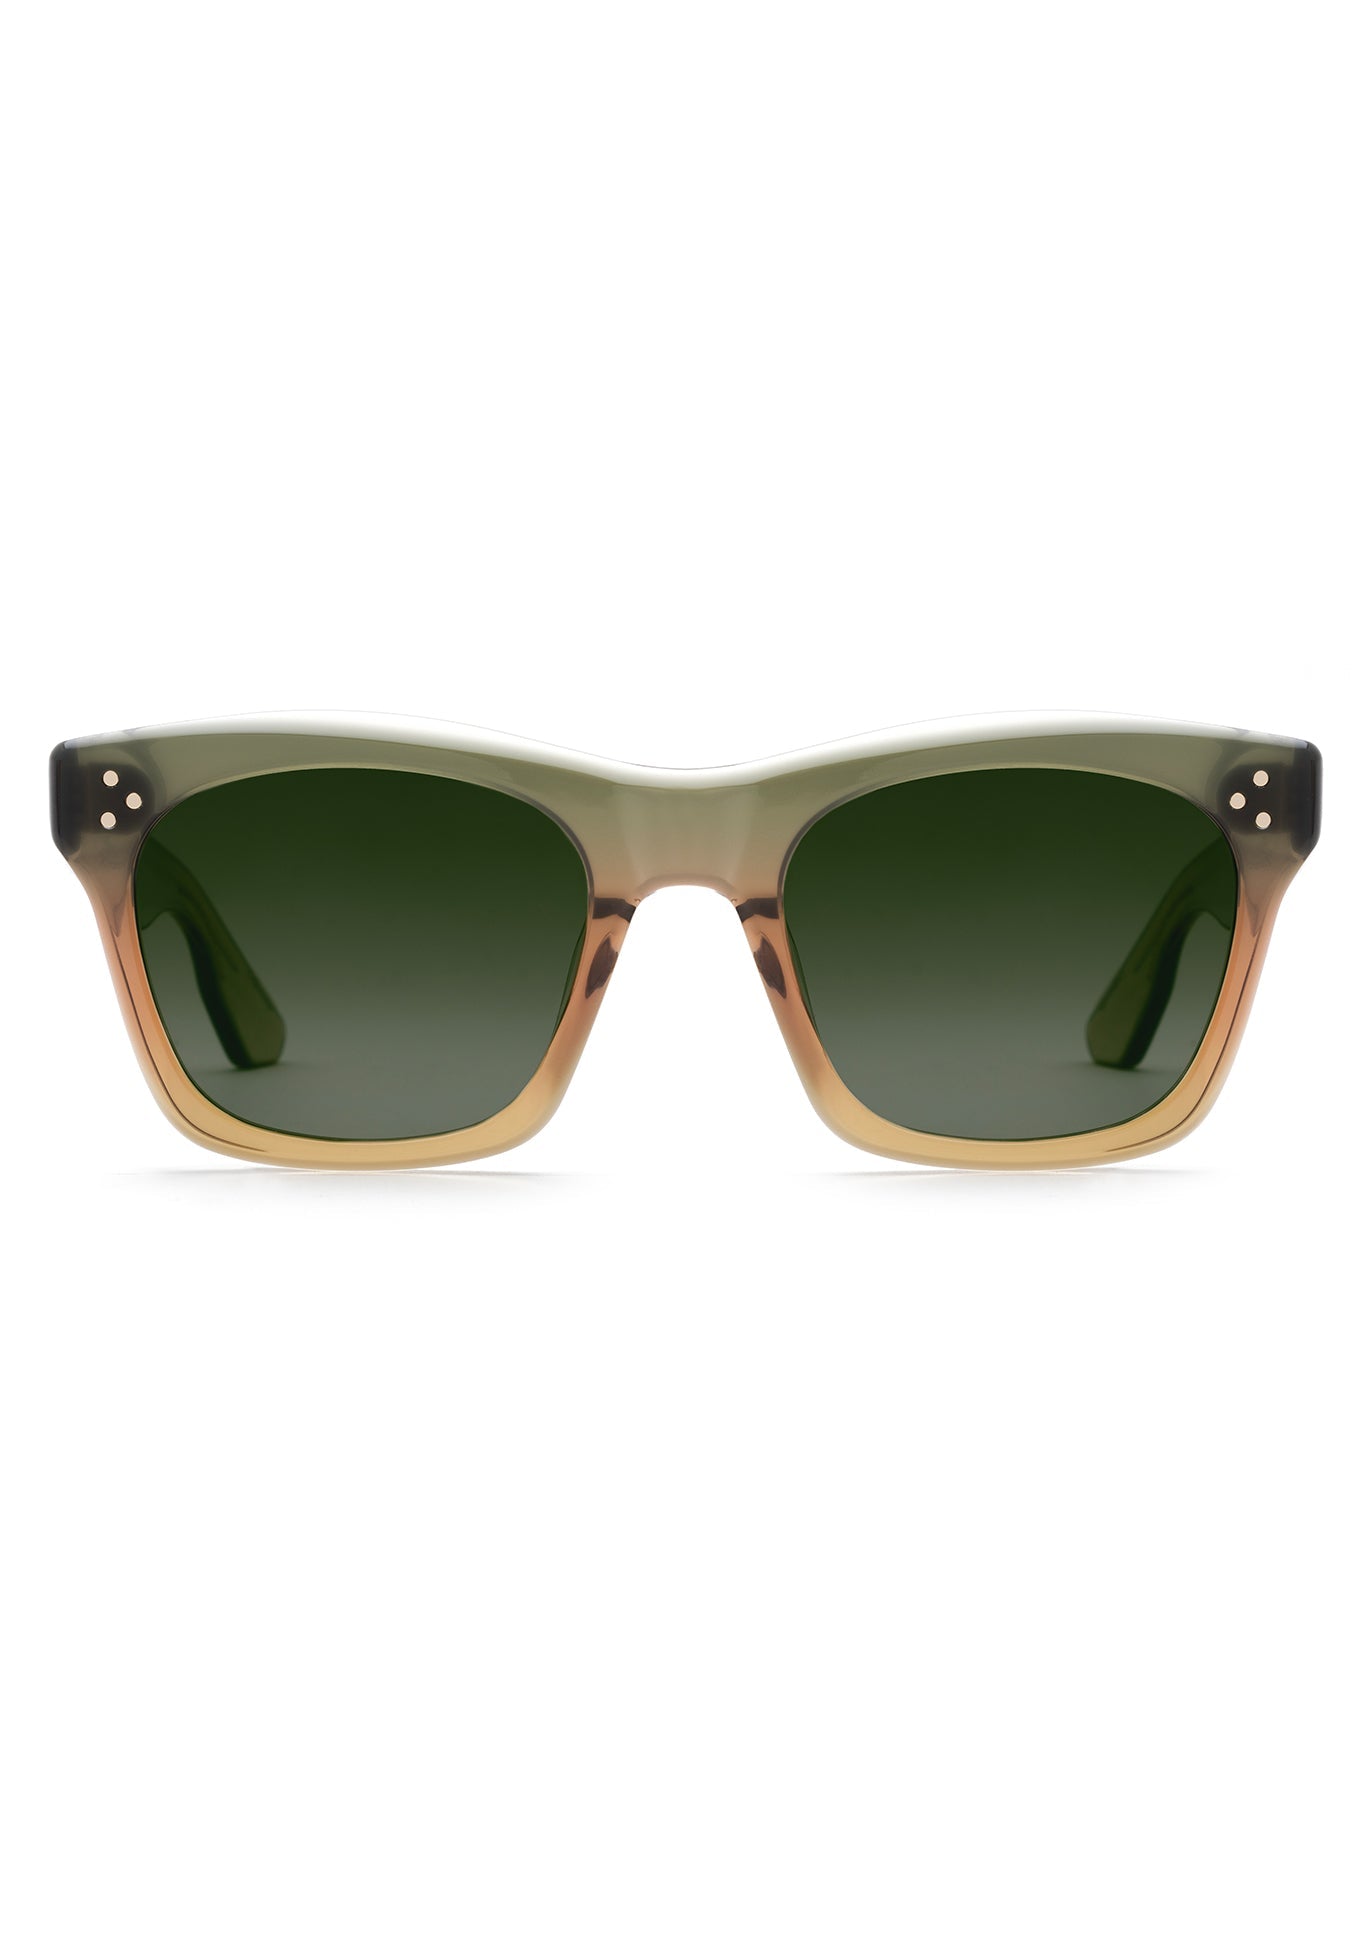 KREWE SUNGALSSES - WILLIAMS | Wasabi Polarized handcrafted green gradient wayfarer polarized sunglasses